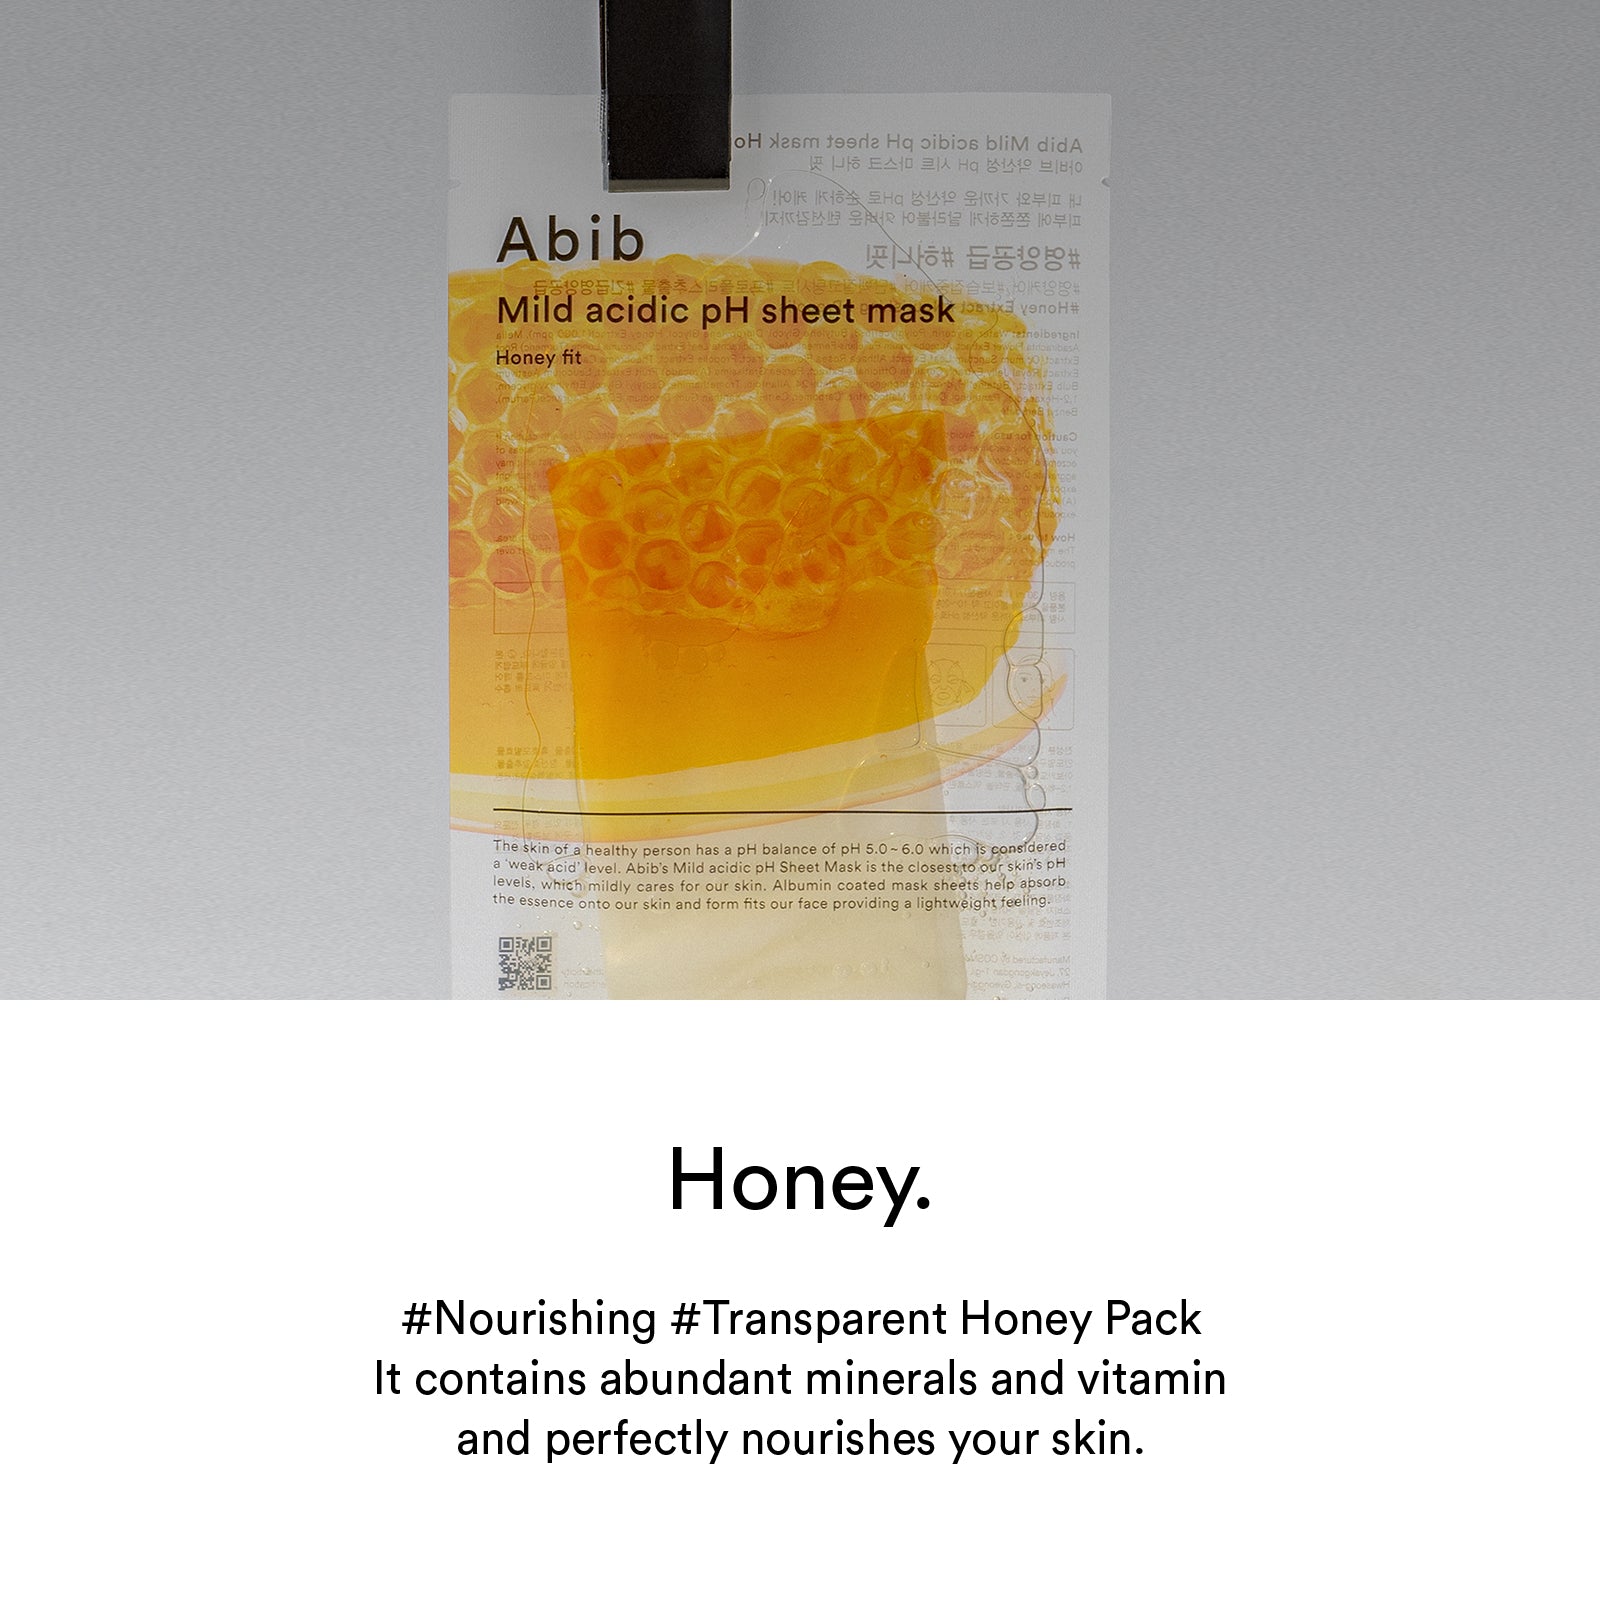 Honey fit (10 sheets)